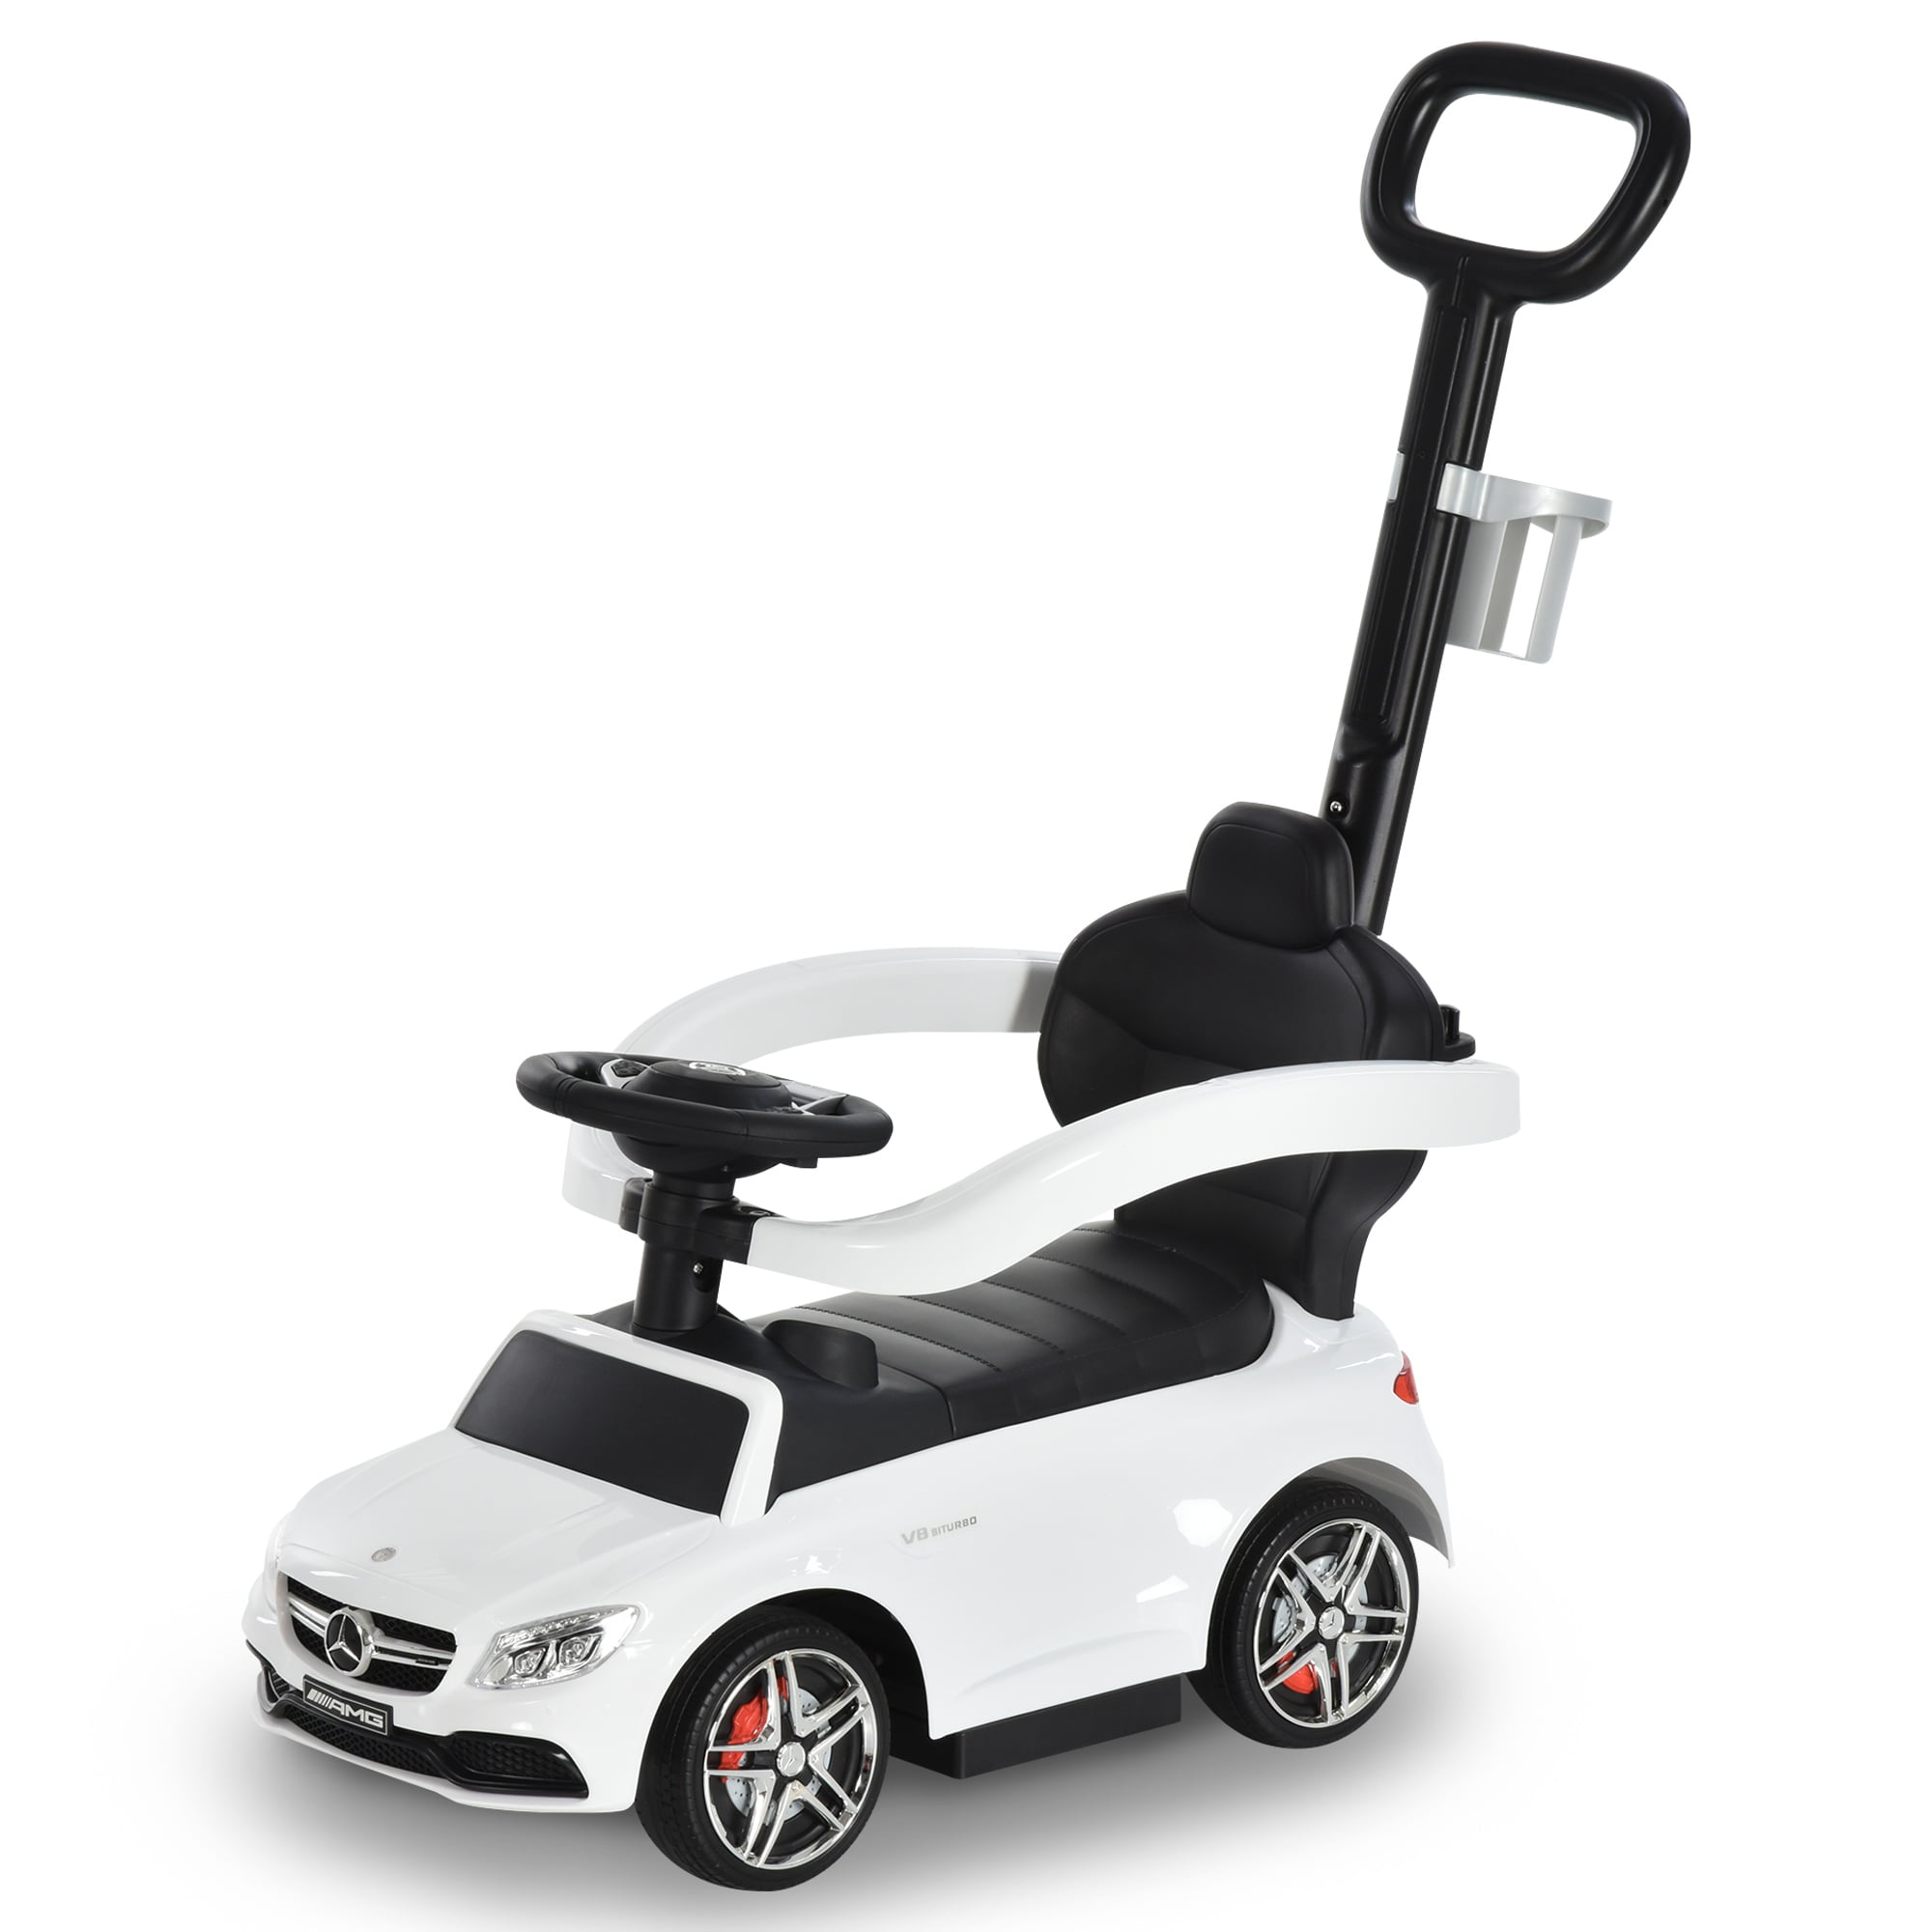 3 in 1 Licensed Volvo Kids Ride On Push Car Stroller for Toddler w/ Canopy White 